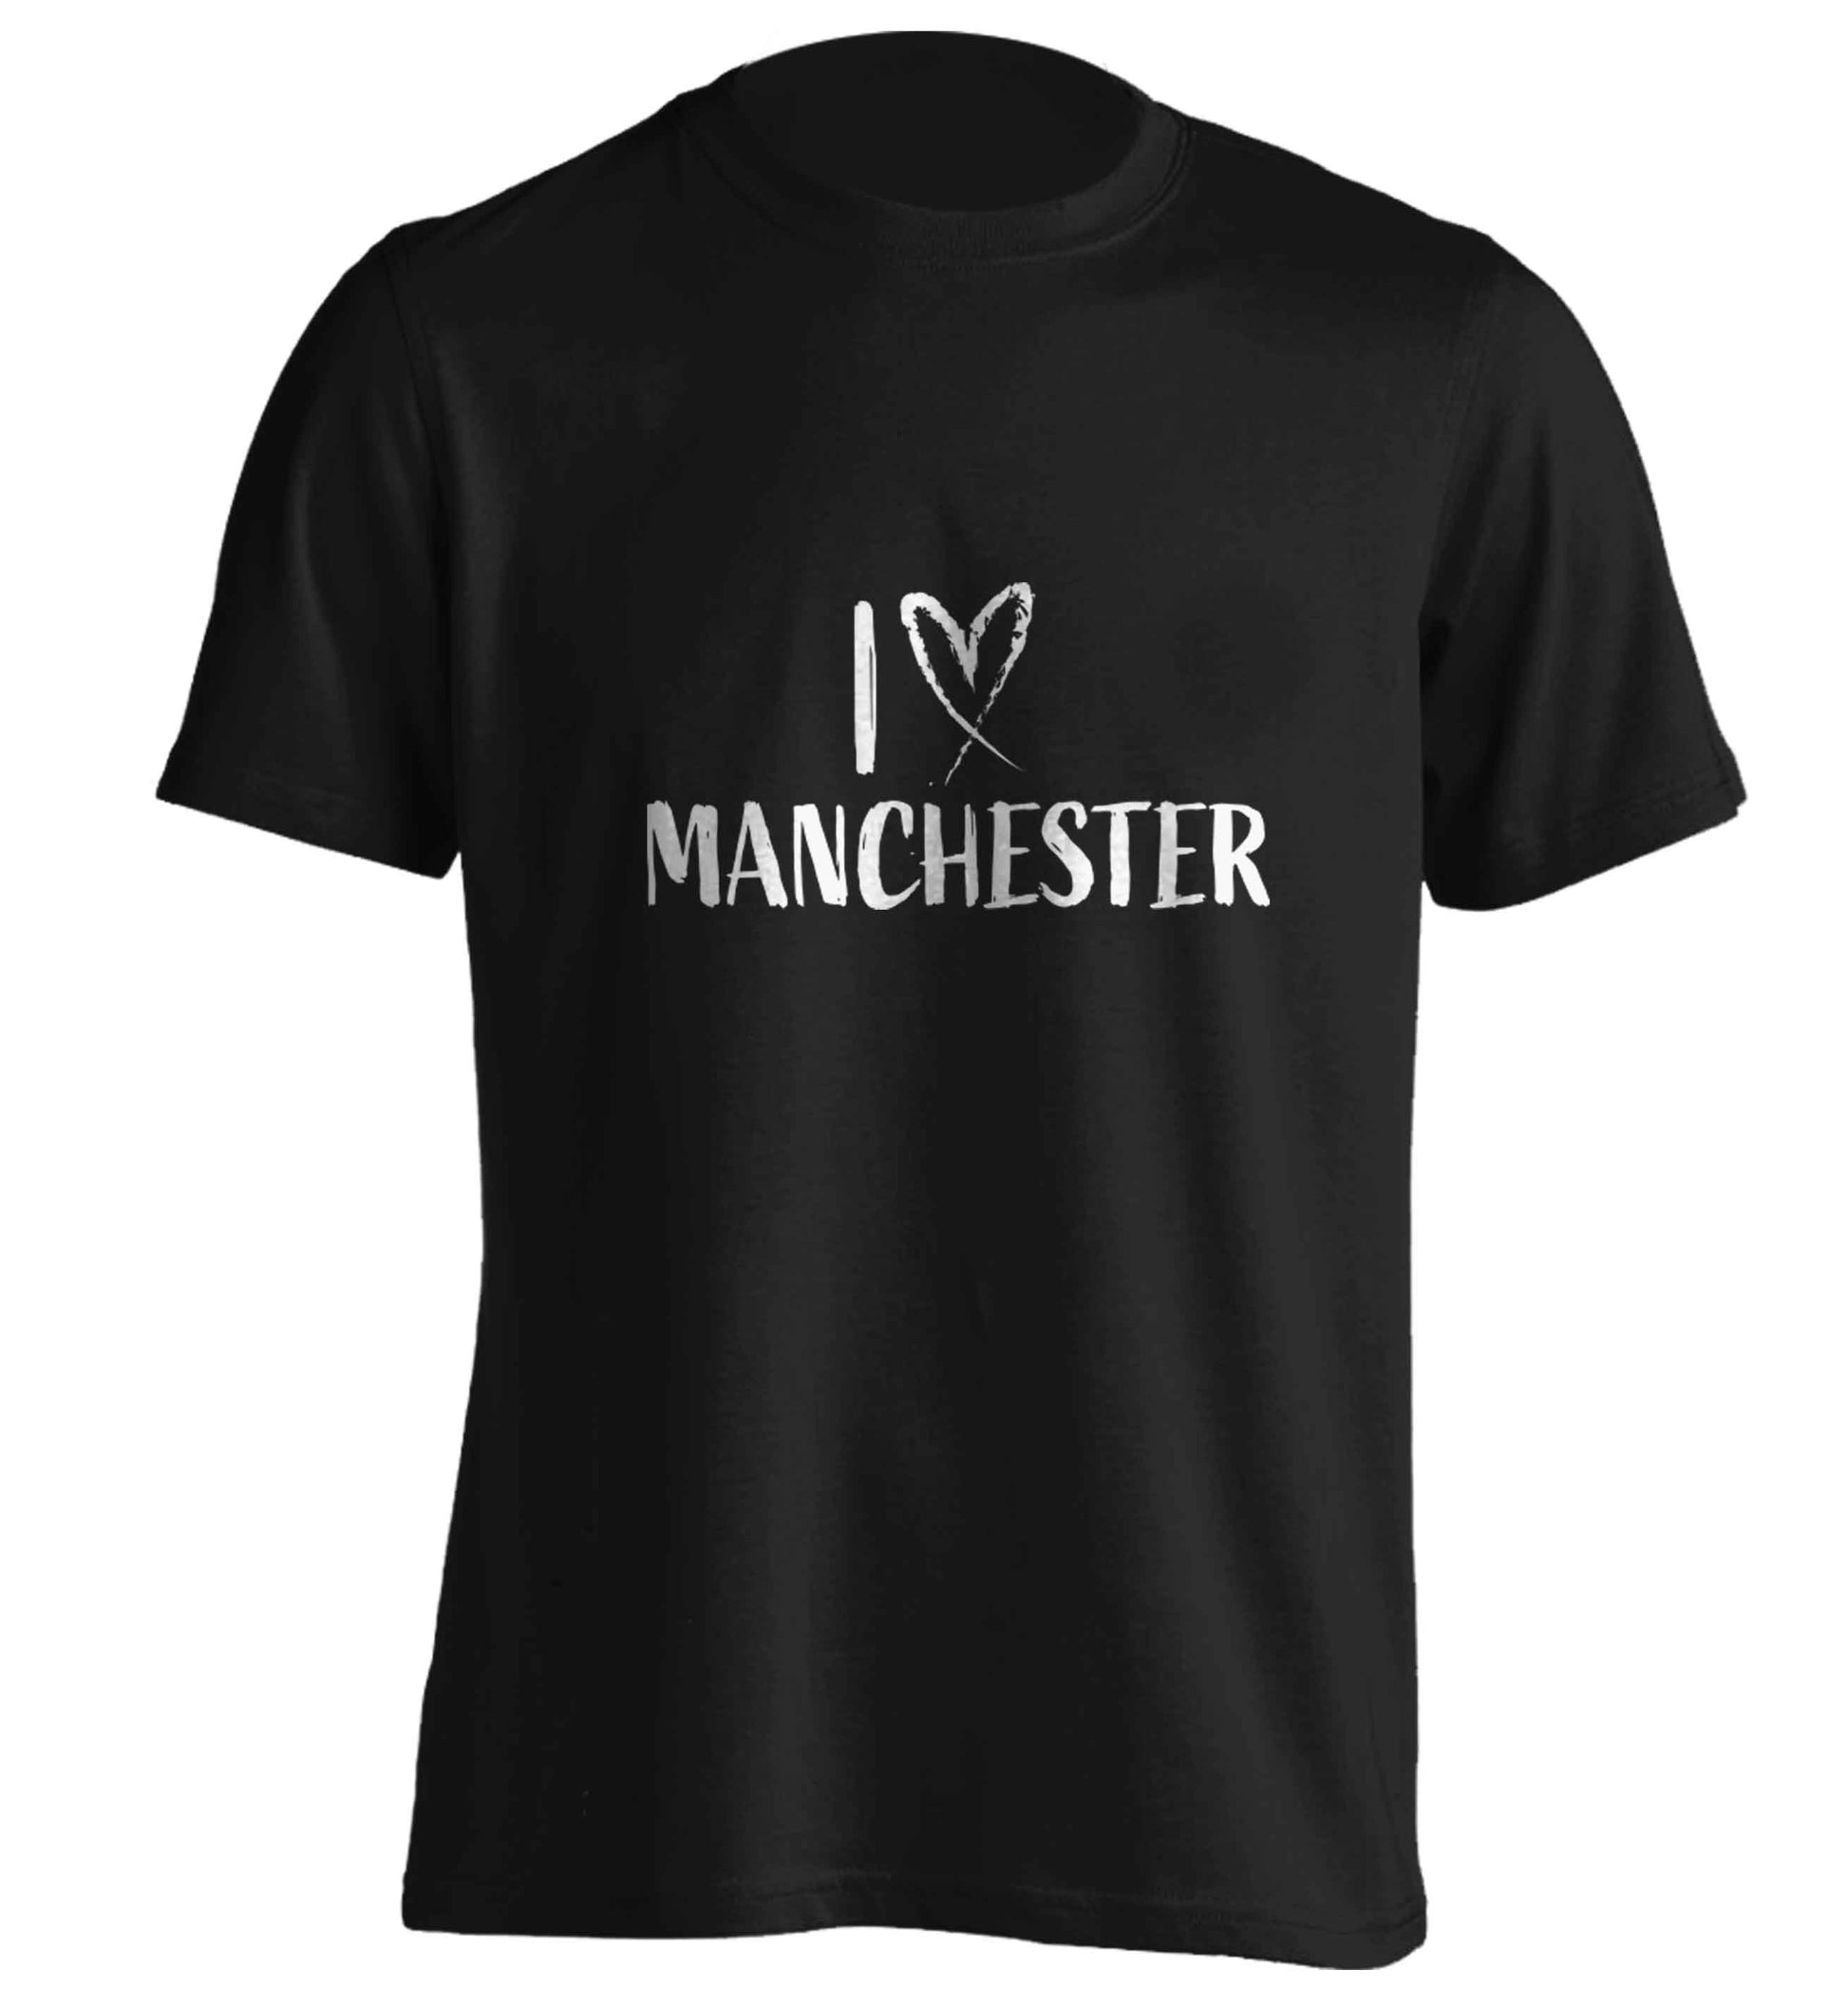 I love Manchester adults unisex black Tshirt 2XL